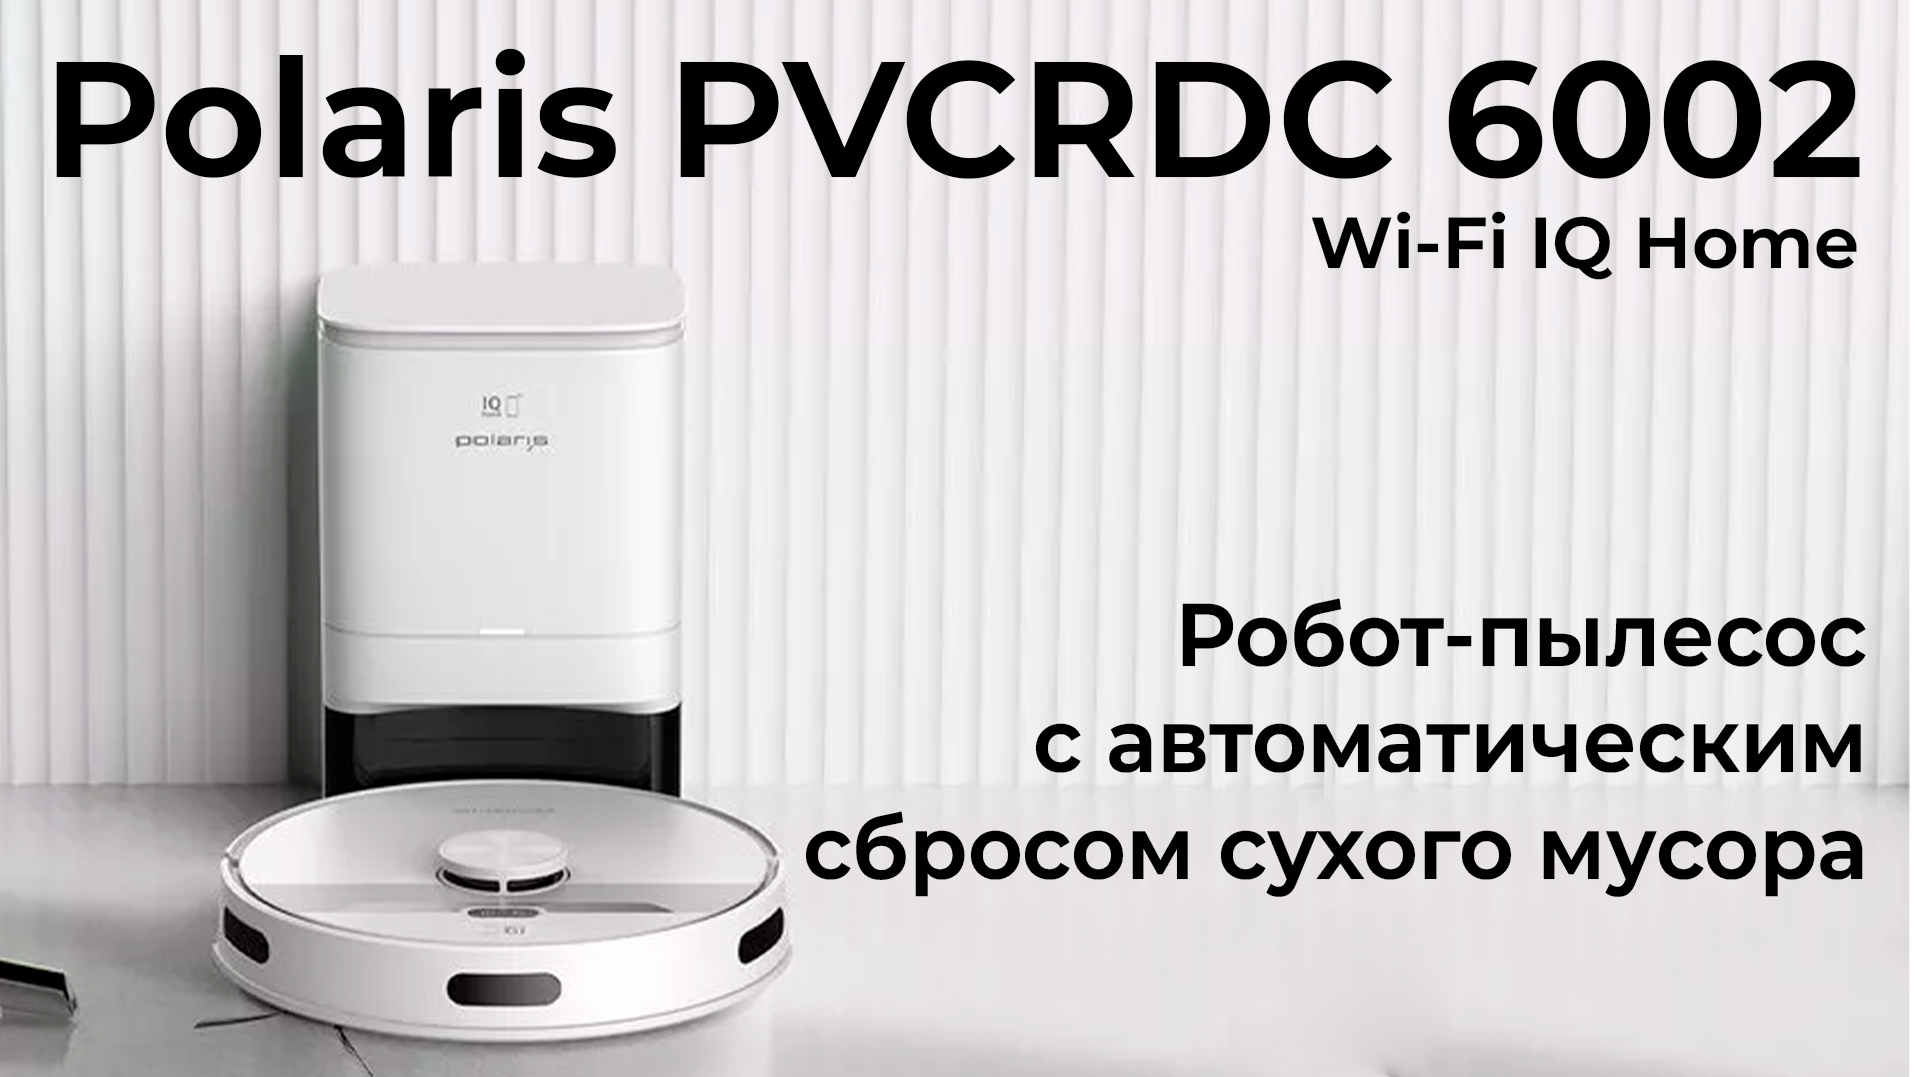 Обзор робота пылесоса Polaris PVCRDC 6002 Wi-Fi IQ Home